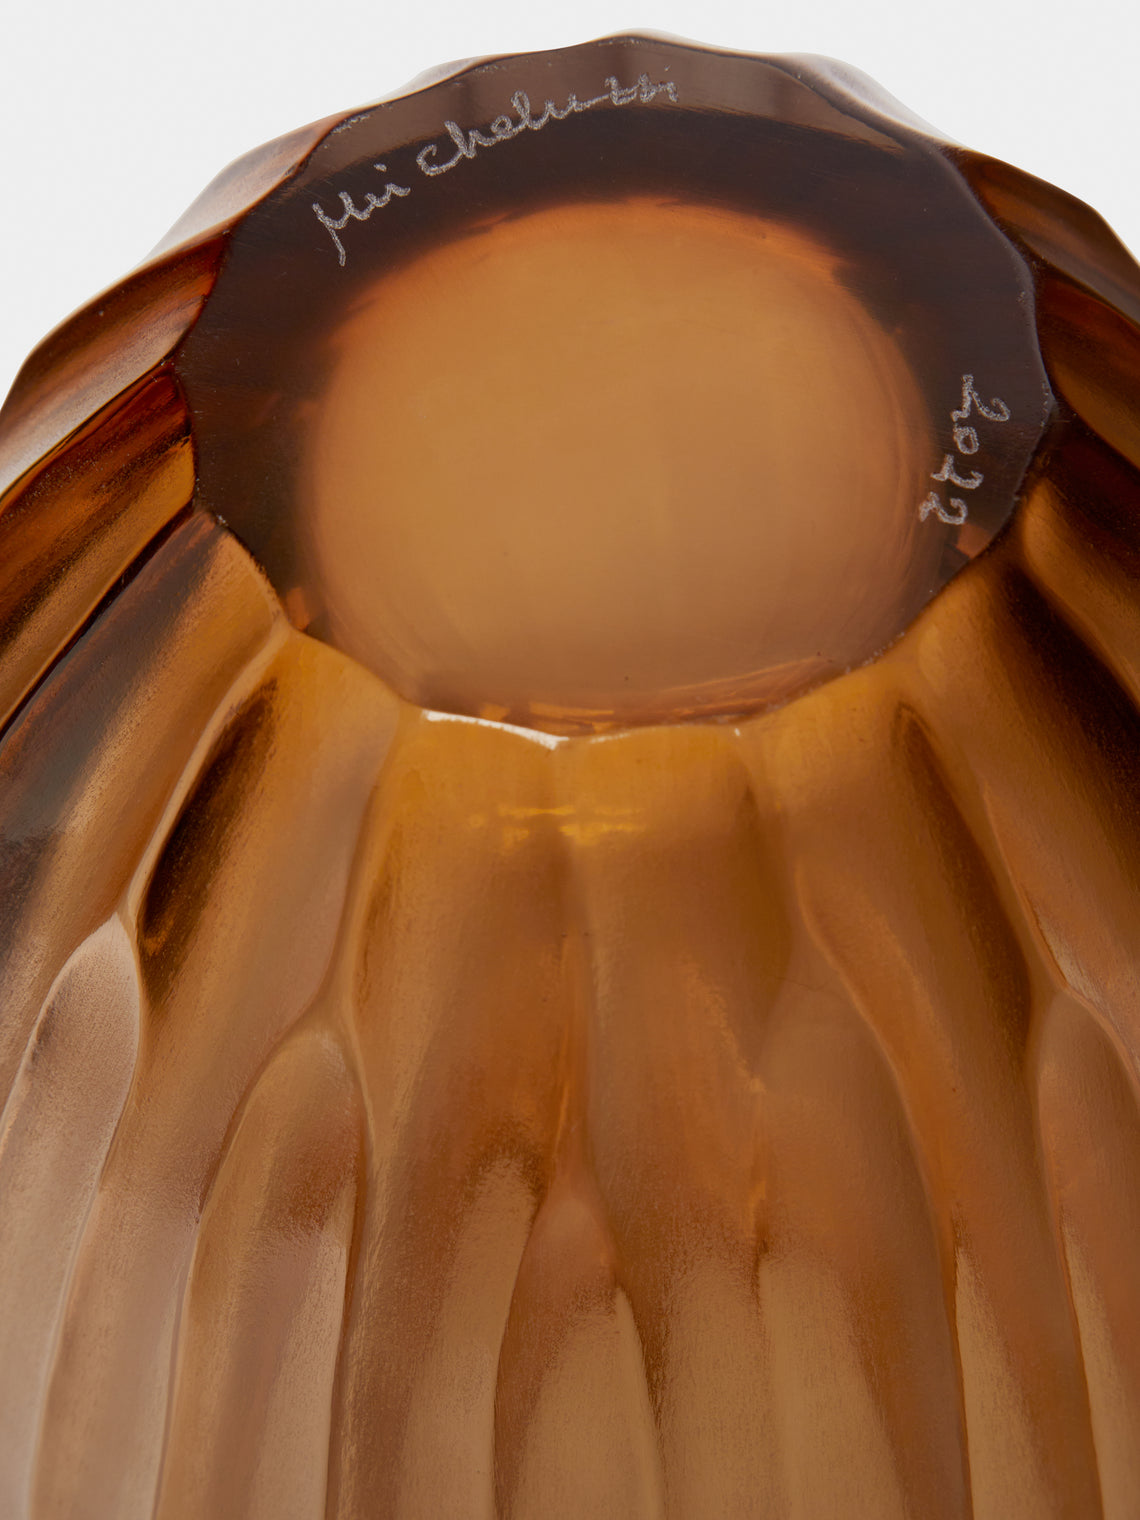 Micheluzzi Glass - Goccia Miele Hand-Blown Murano Glass Vase - Yellow - ABASK